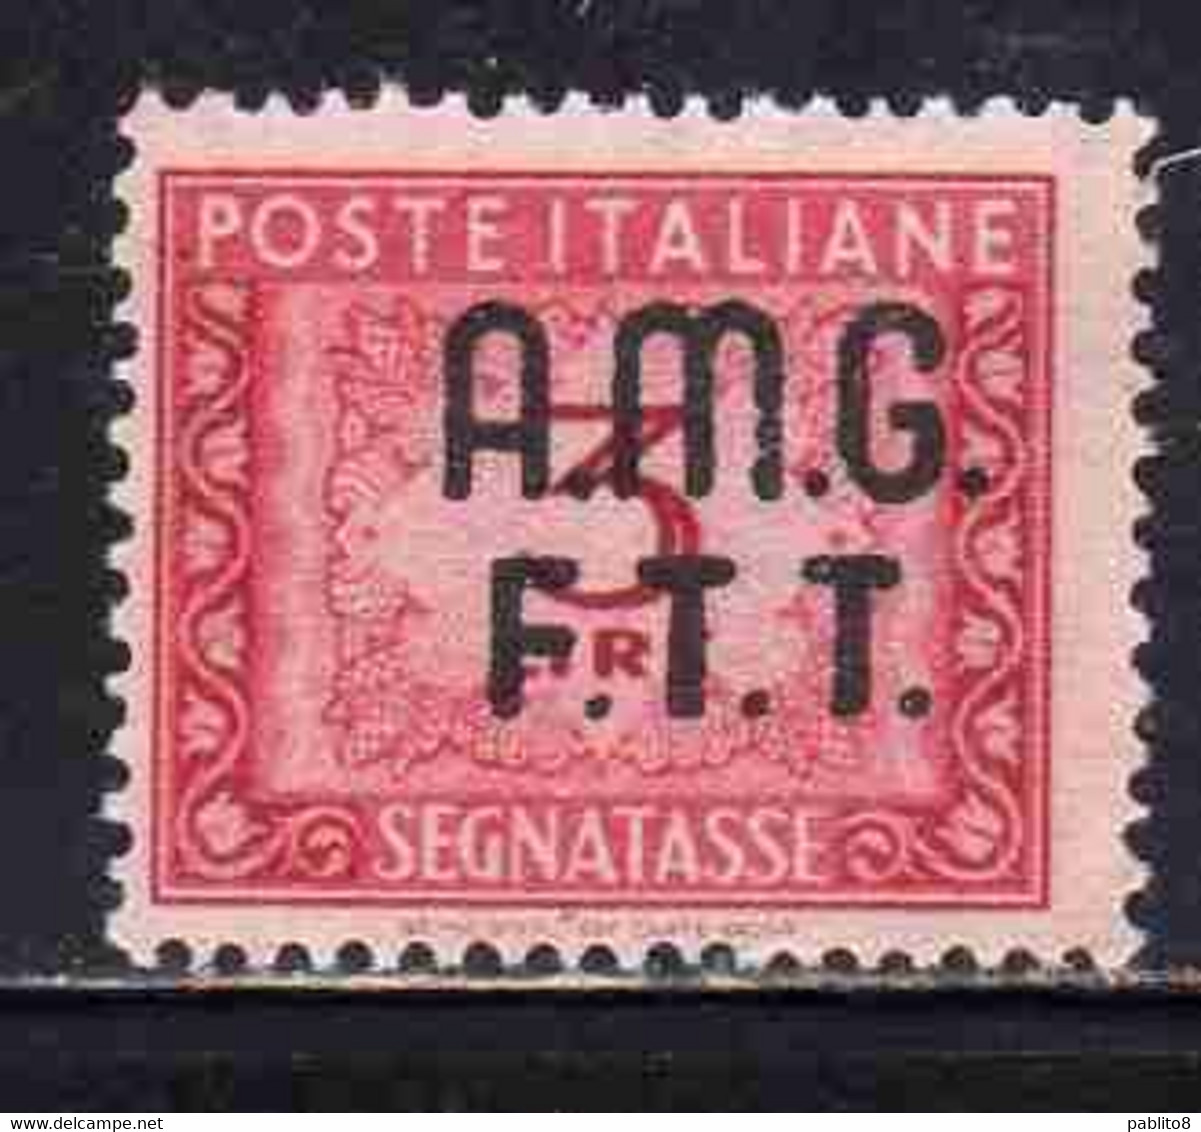 TRIESTE A 1947 - 1949 AMG-FTT OVERPRINTED SEGNATASSE POSTAGE DUE TAXE TASSE LIRE 3 MNH - Postage Due